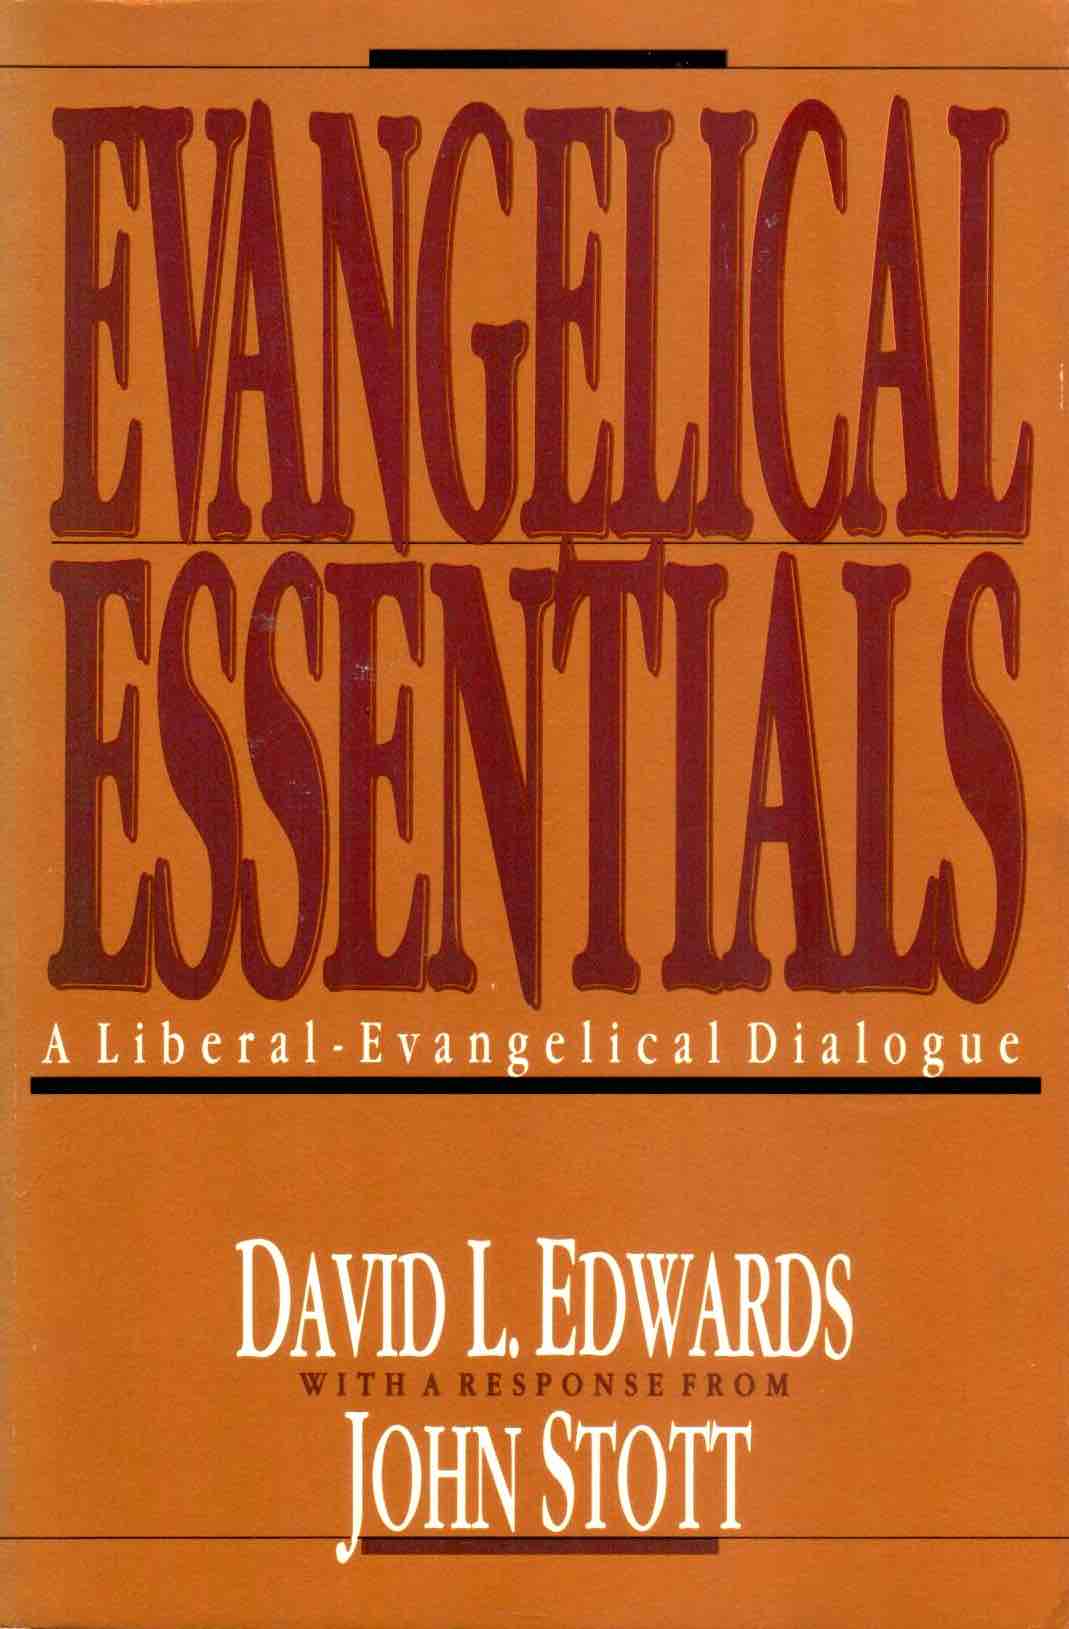 Cover of Evangelical Essentials